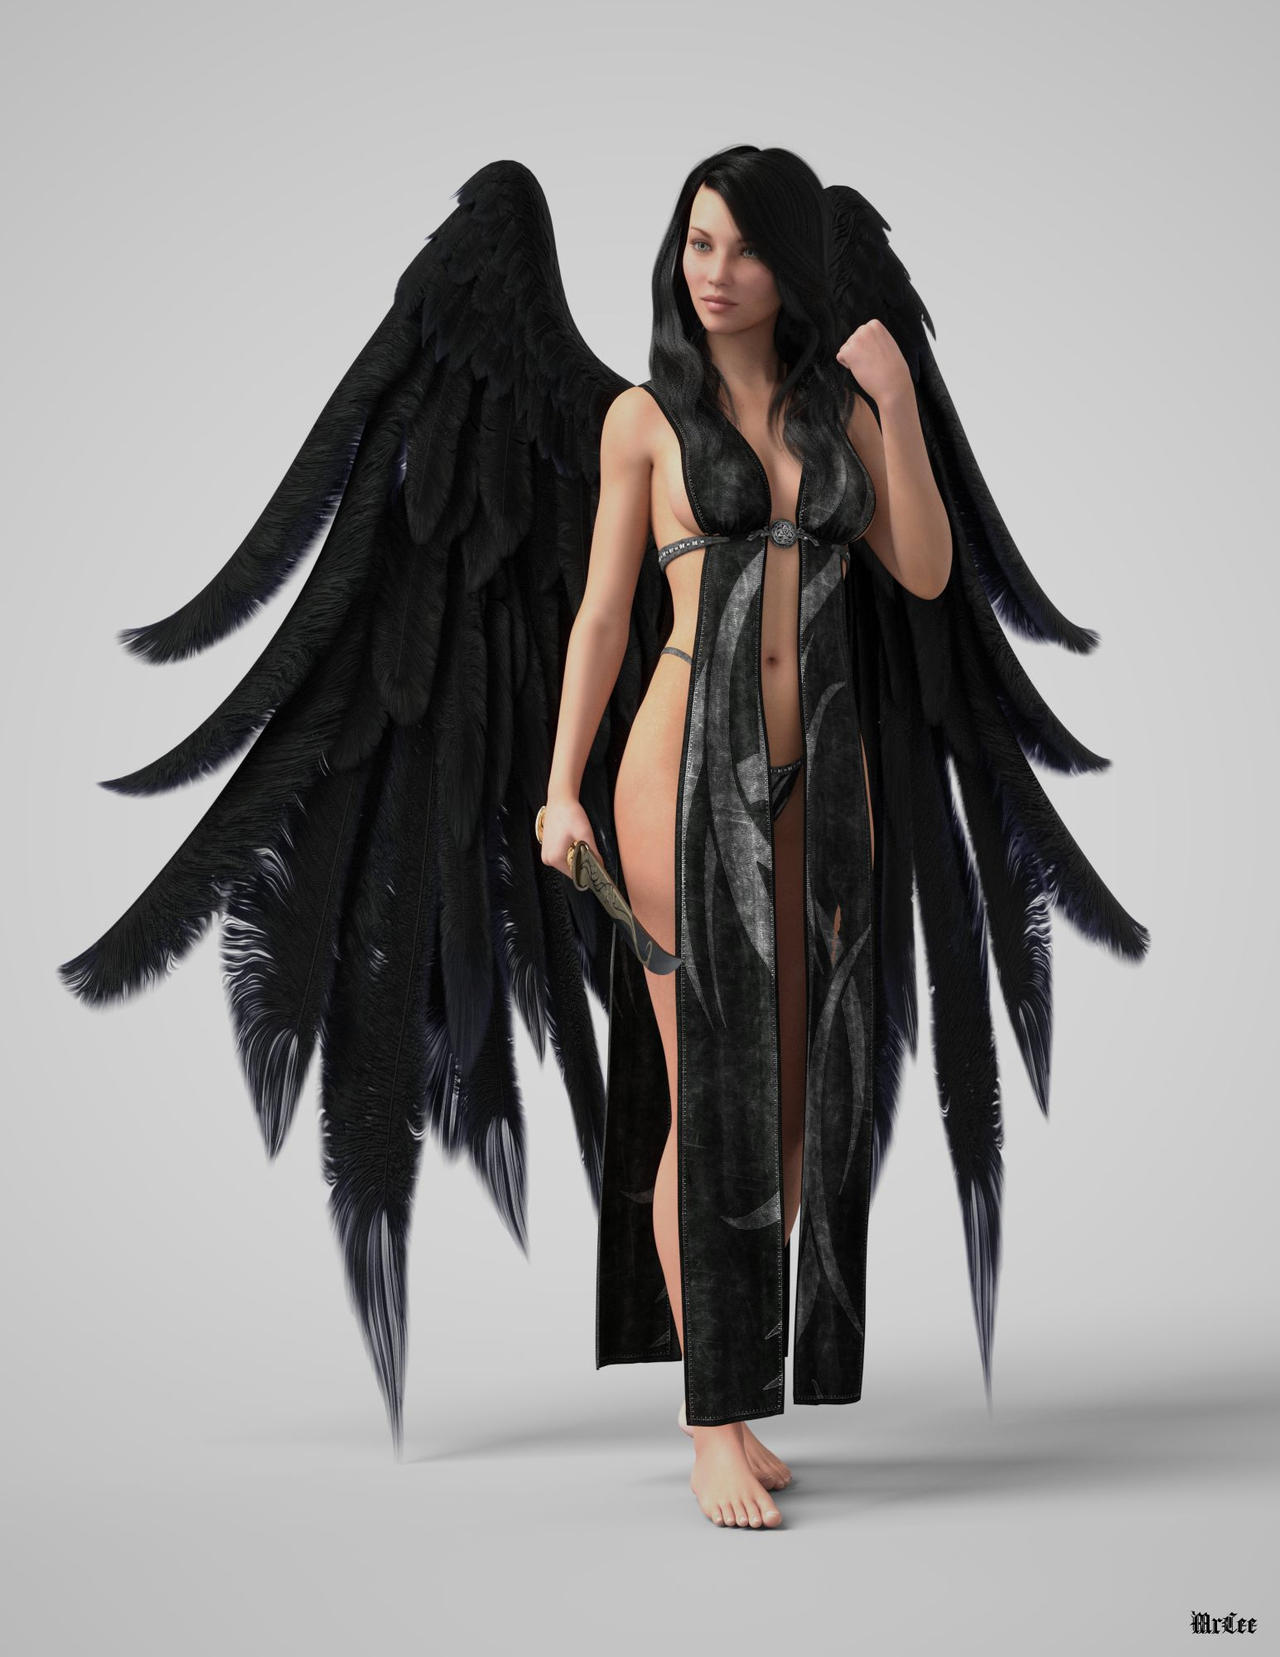 Angels of Death OC by almondlii on DeviantArt